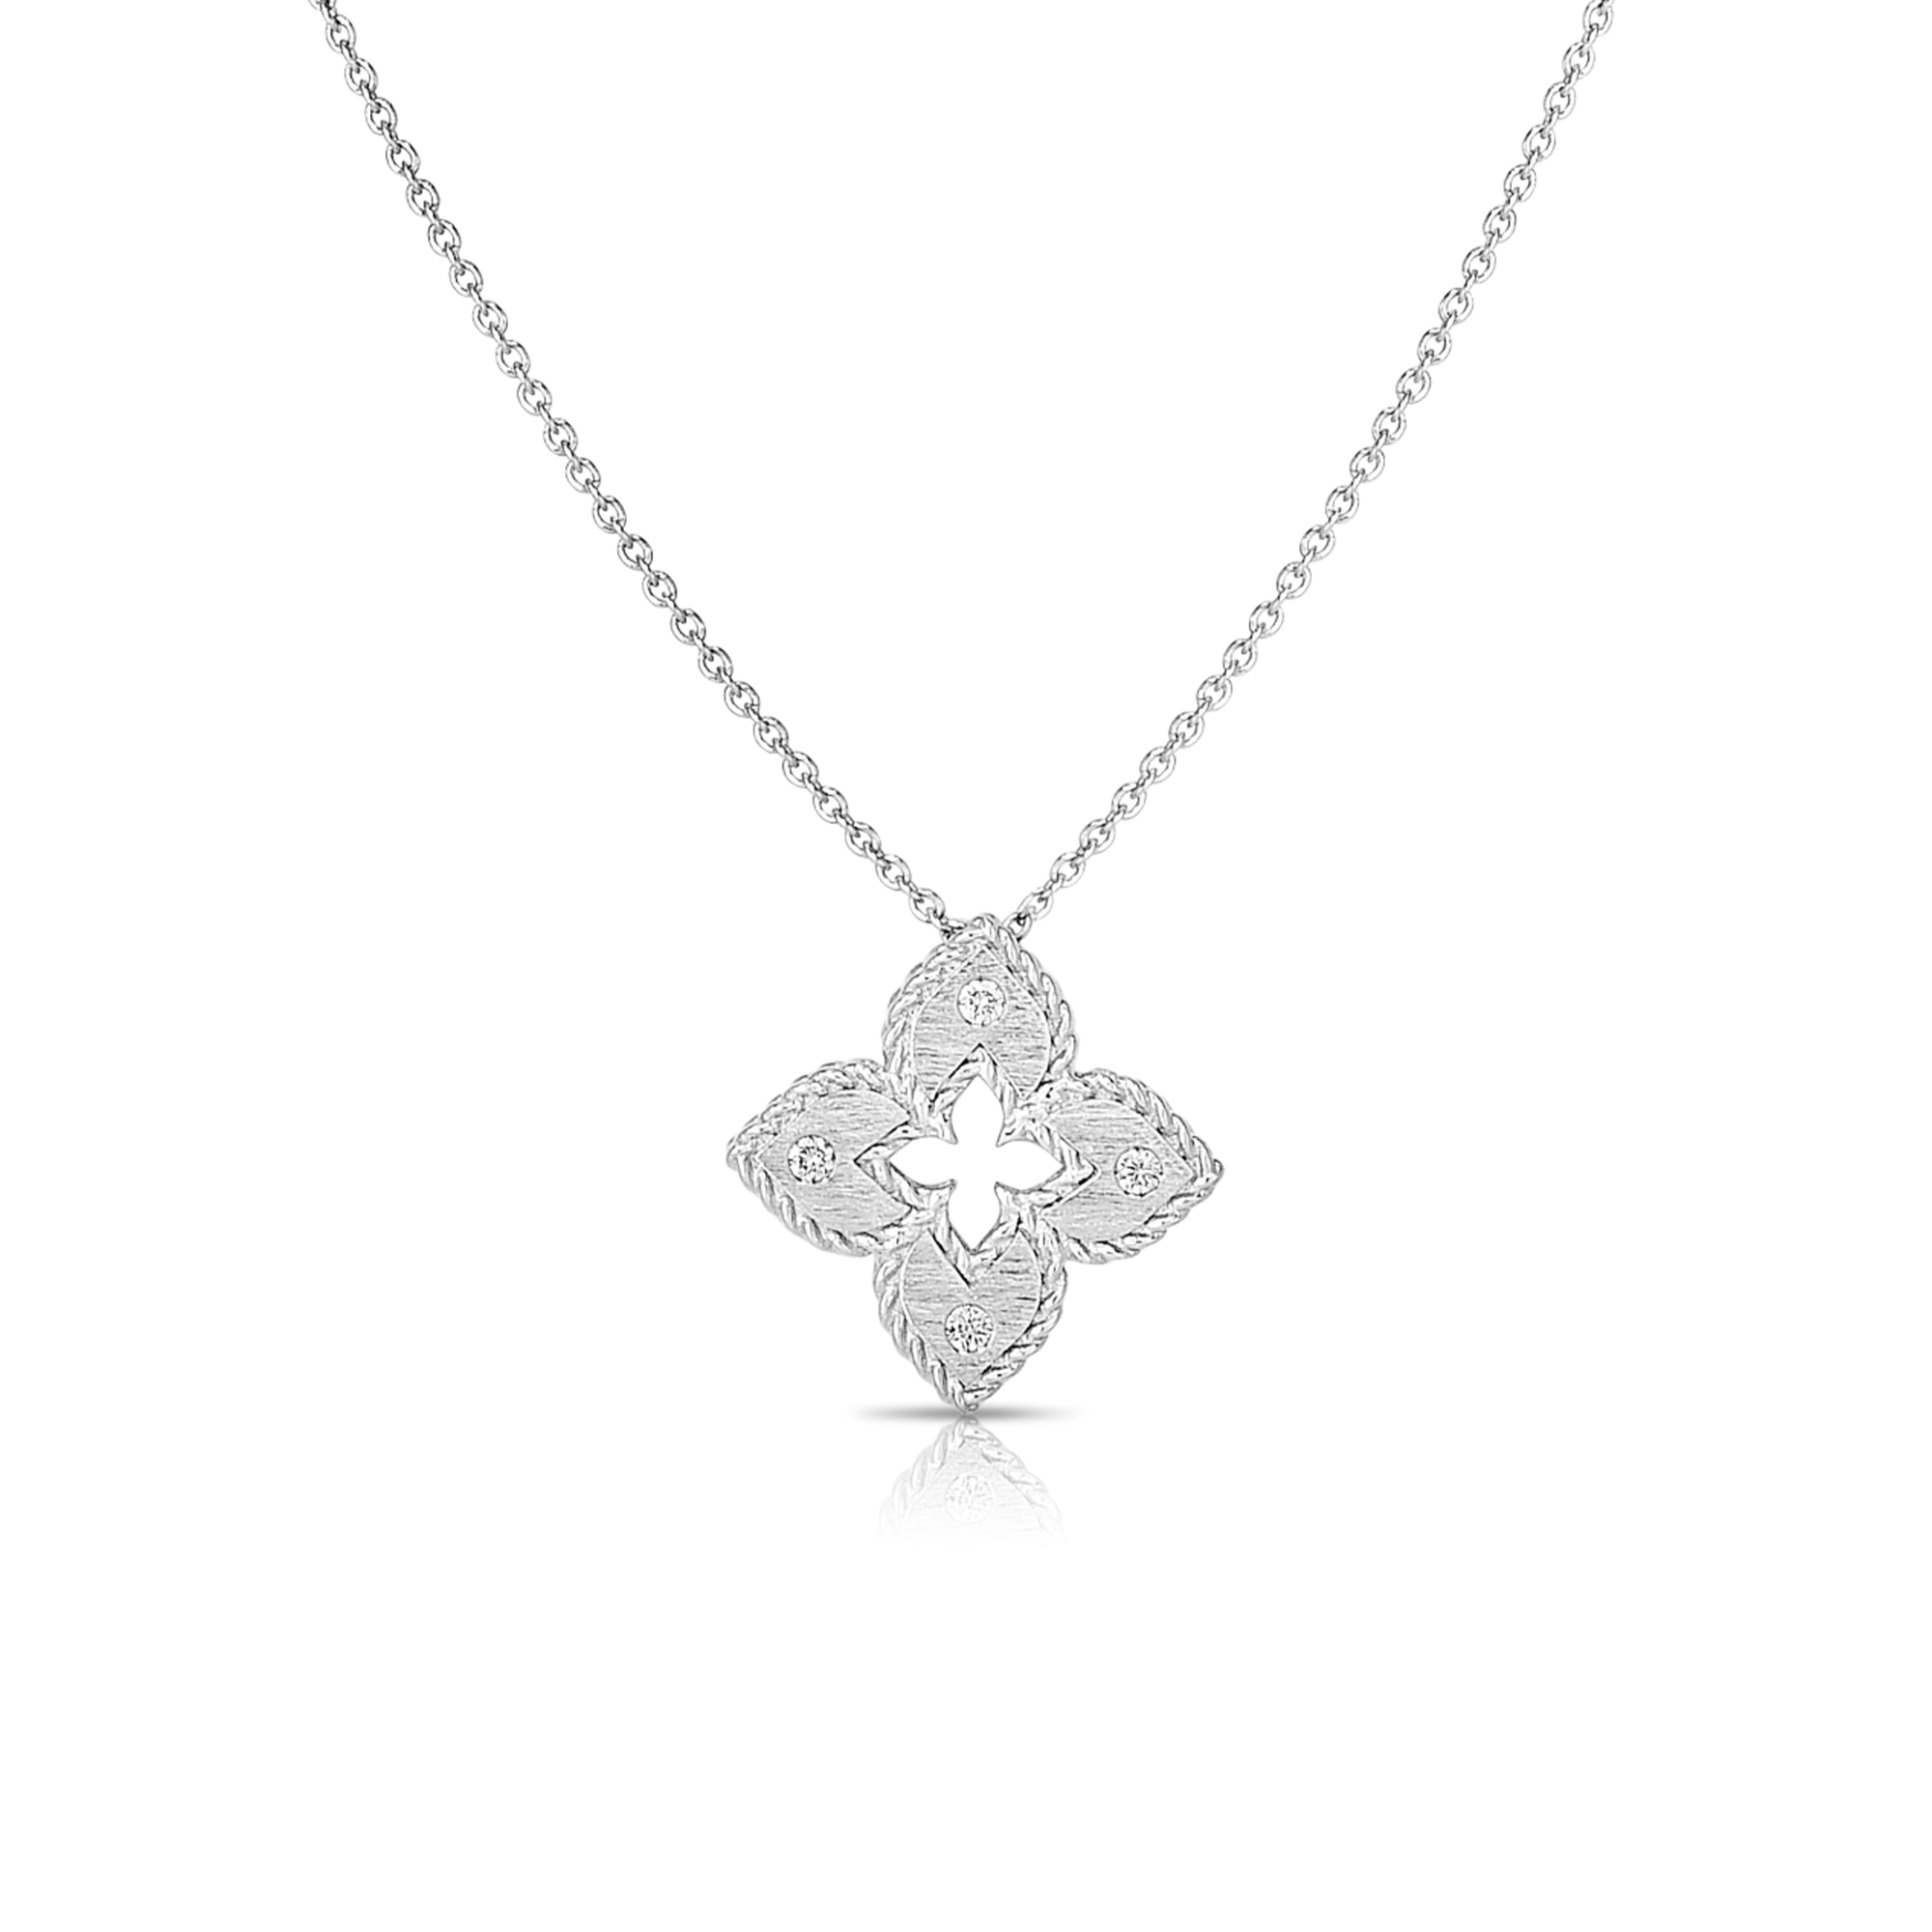 Venetian Princess White Gold and Diamond Pendant Necklace 